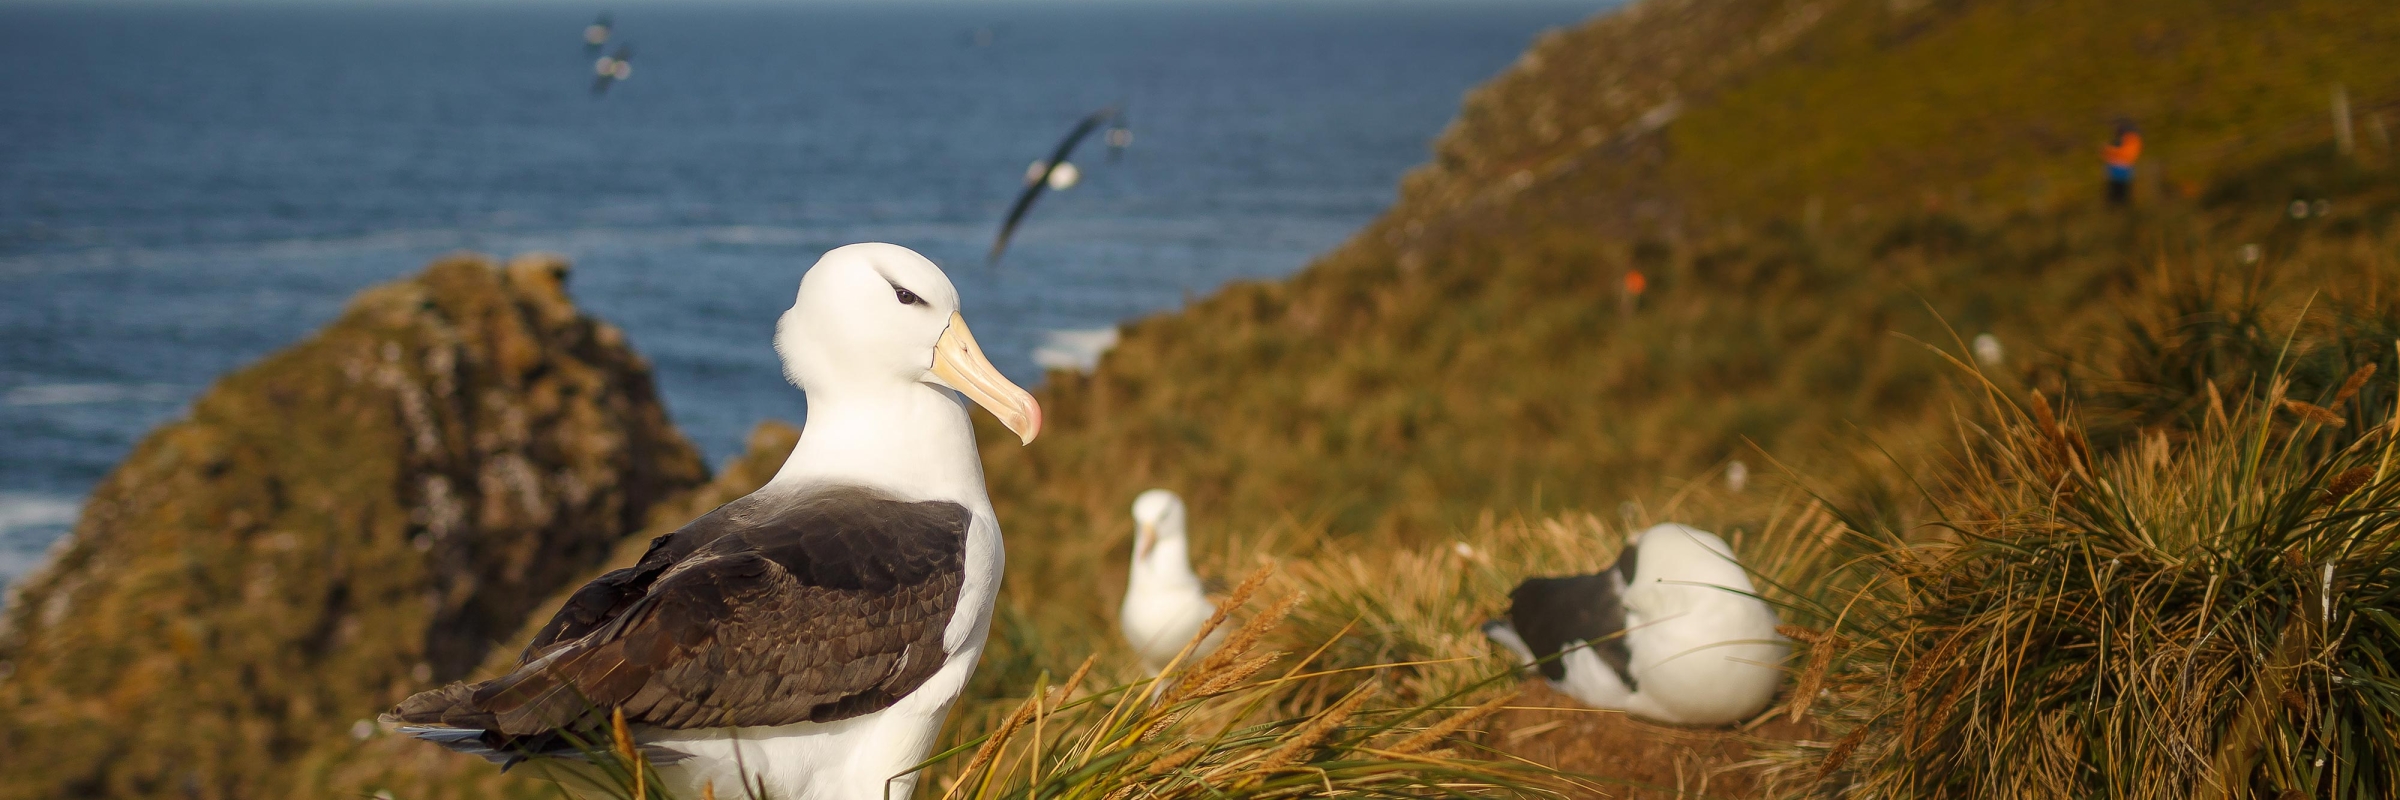 Albatross colony in the Falkland Islands. Photo by David Merron.